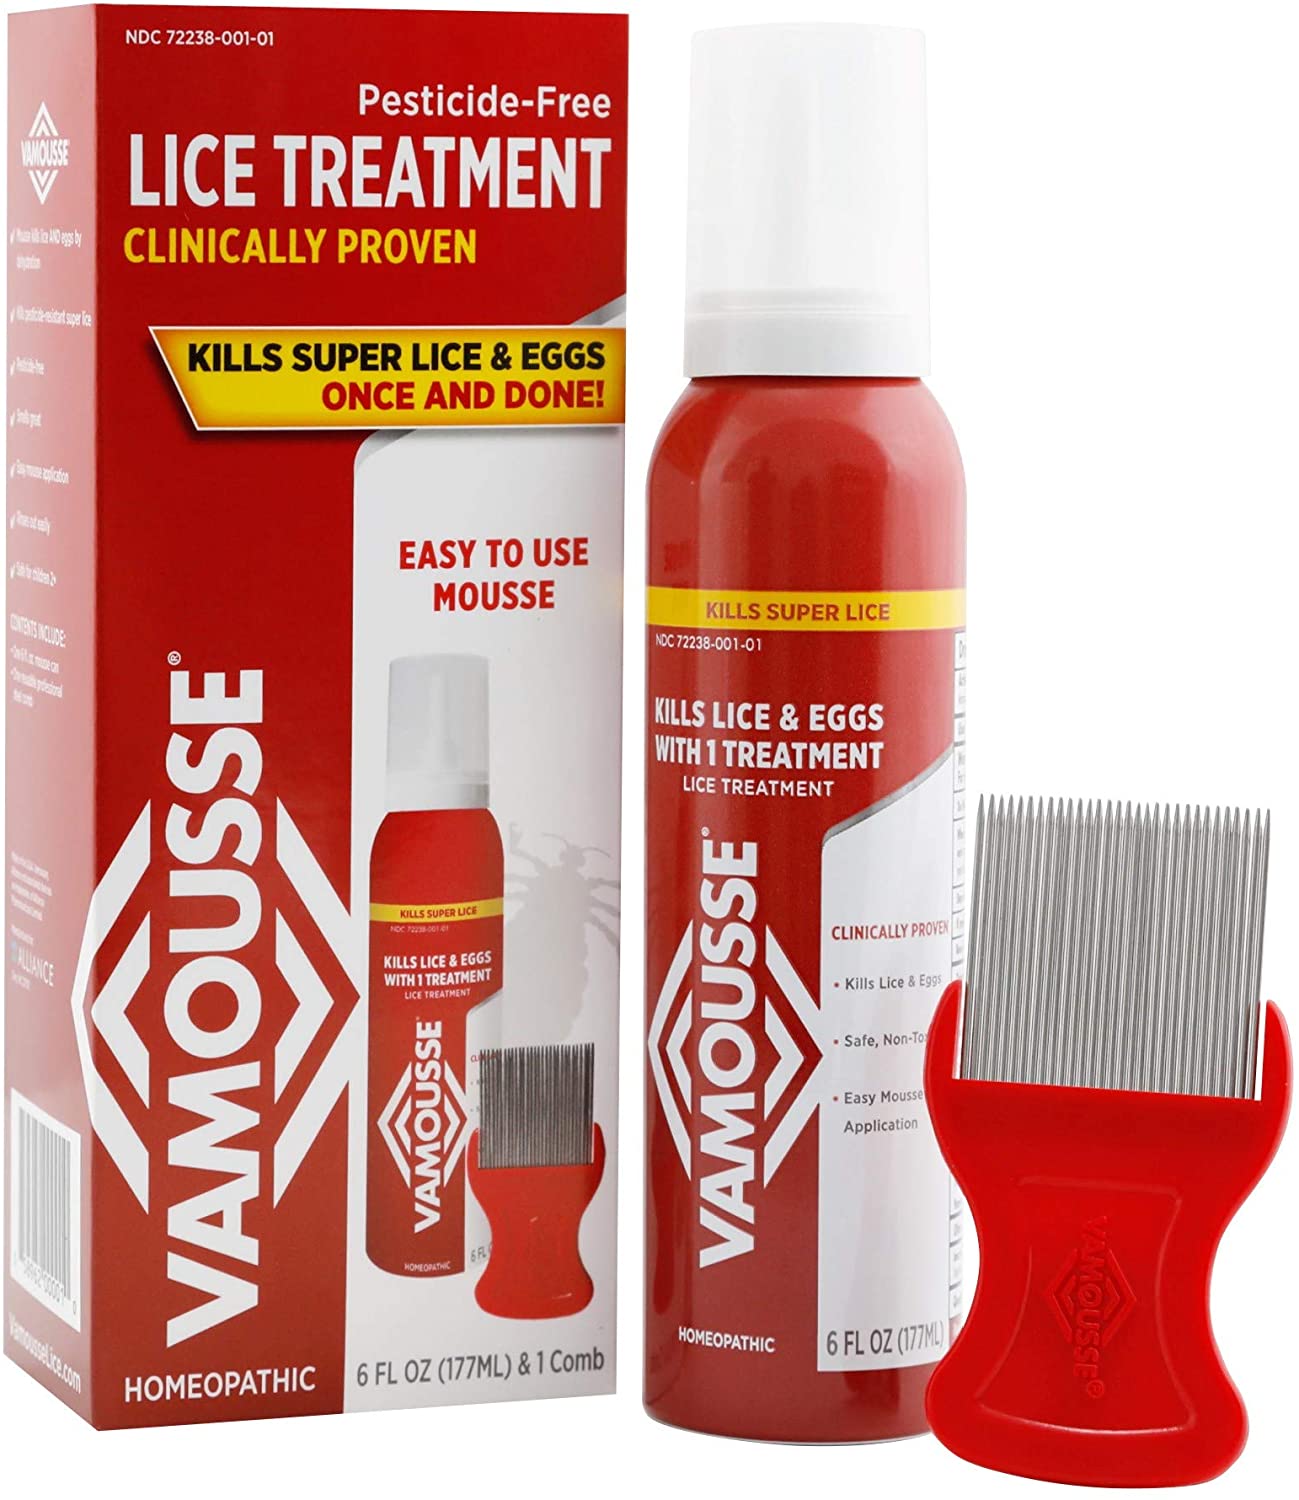 Vamousse Head Lice Treatment Homeopathic 6 fl oz-image